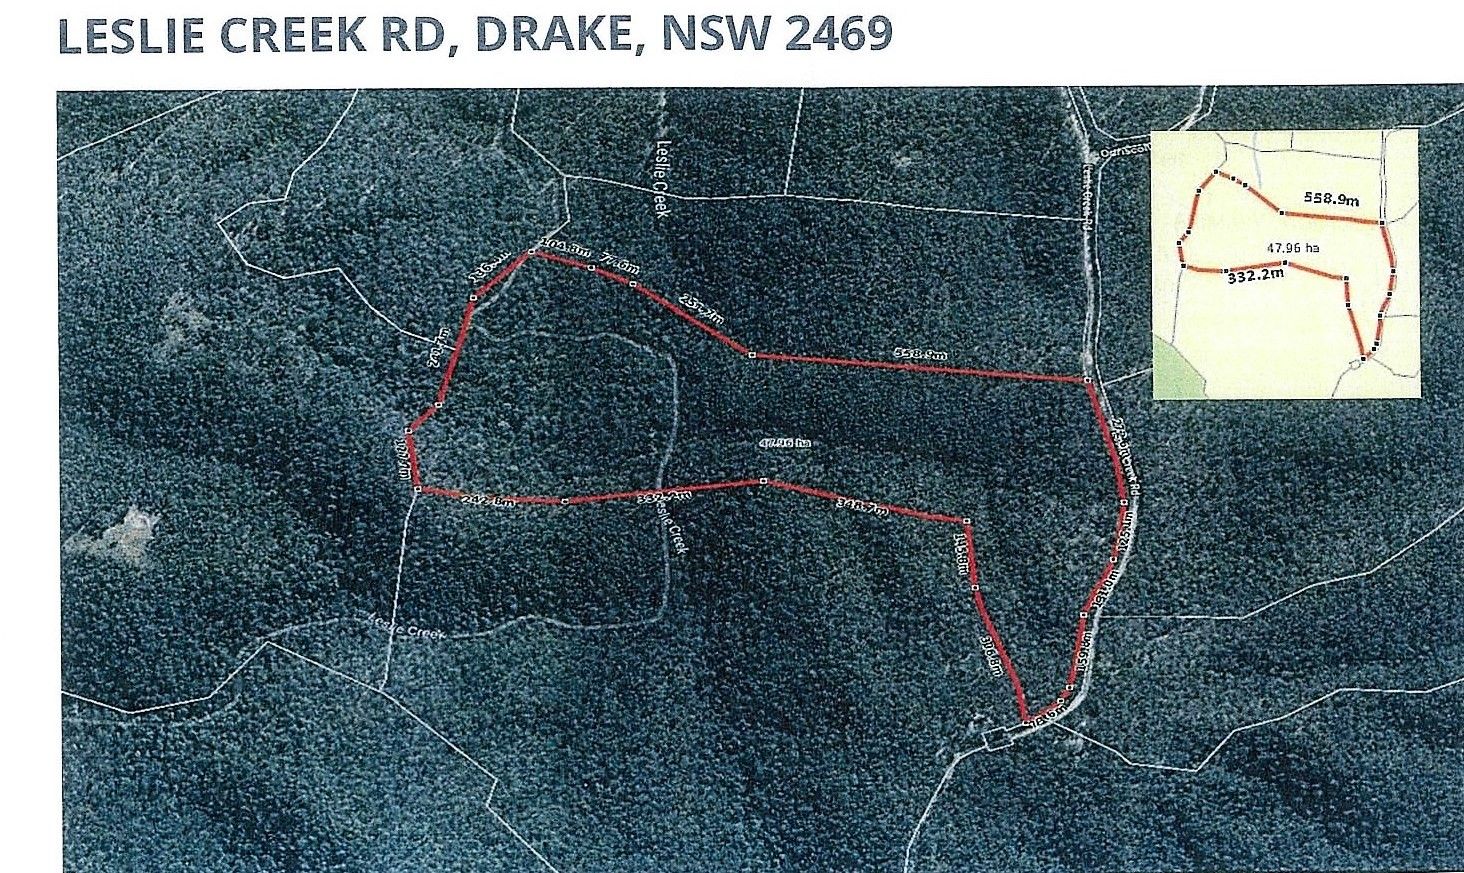 12 Leslie Creek Road, Drake NSW 2469, Image 0